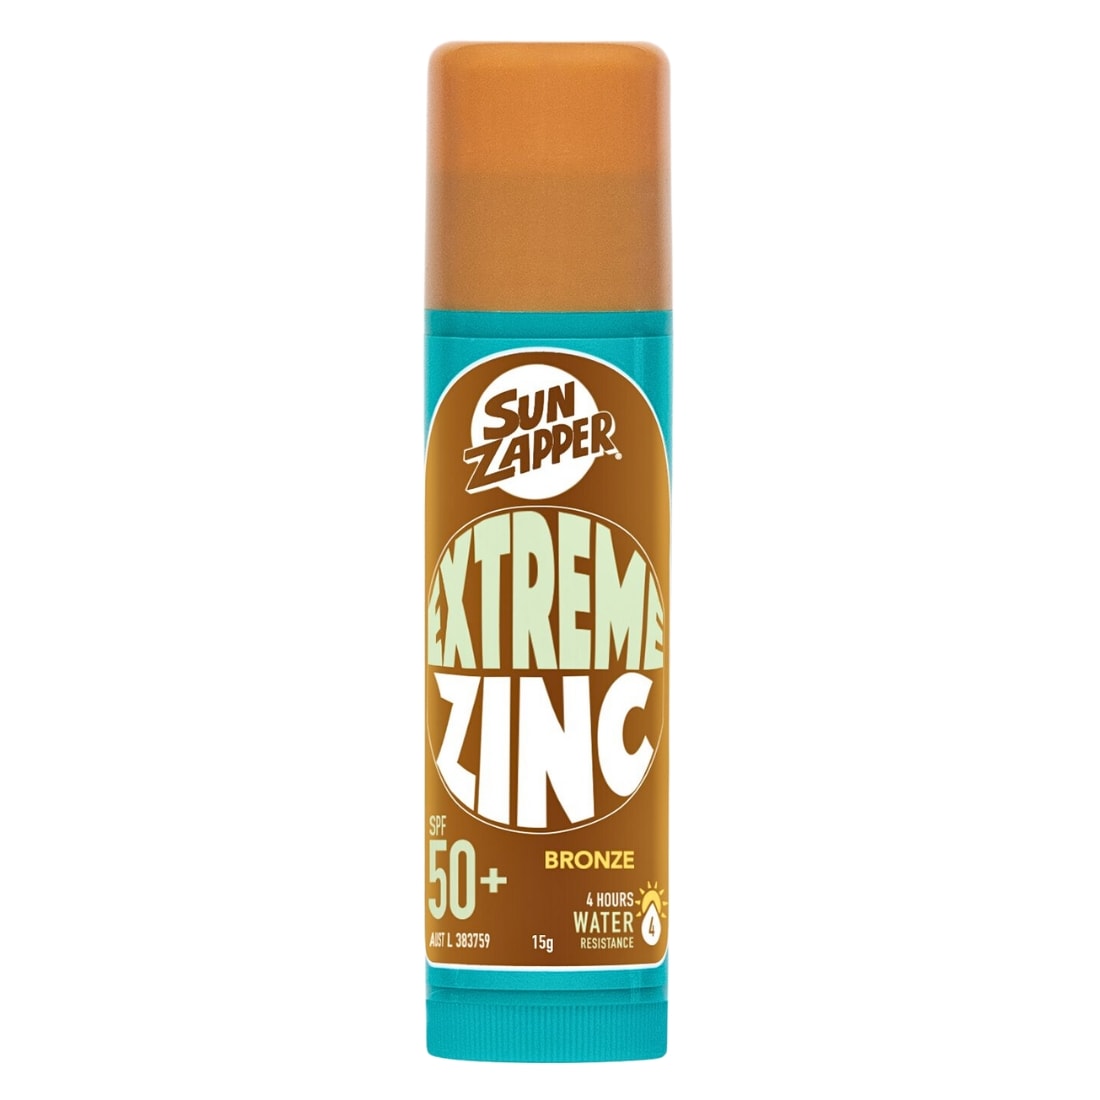 Sun Zapper Extreme Zinc SPF50+ Face Stick - Bronze